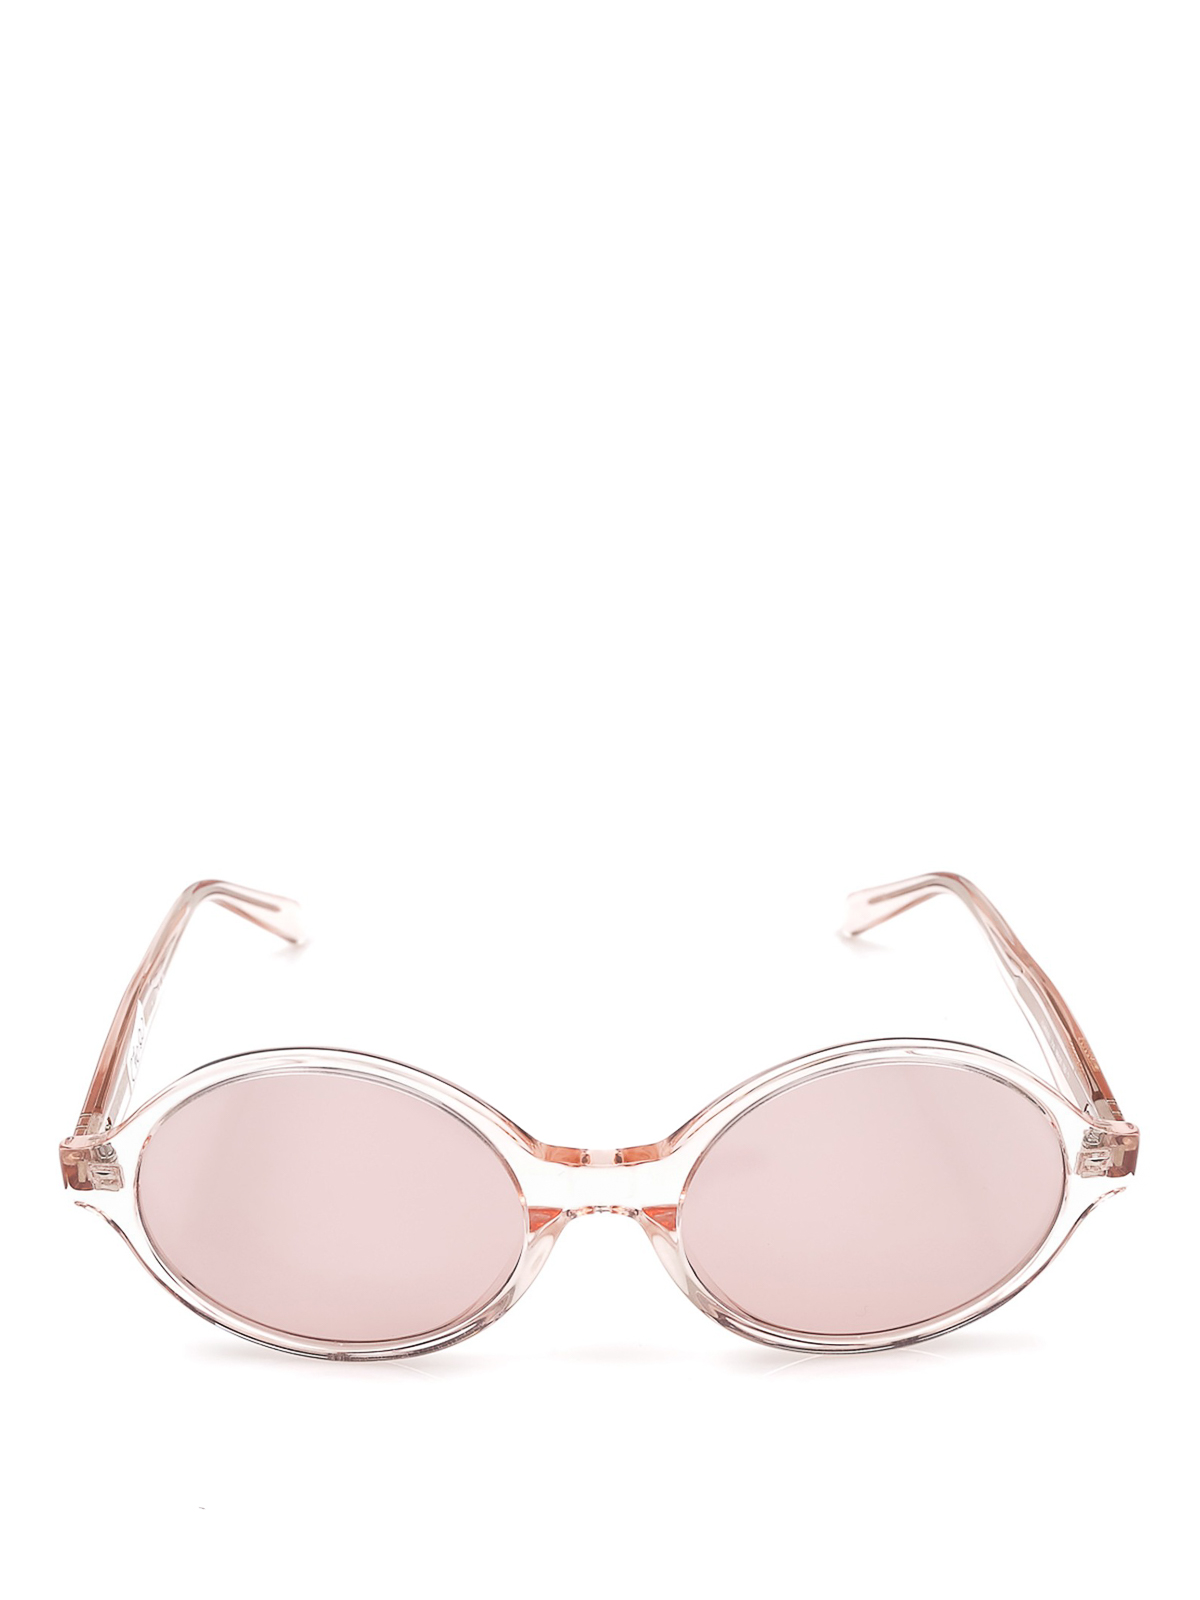 Sunglasses Céline - Pink round frame sunglasses - CL40051I72S | iKRIX.com